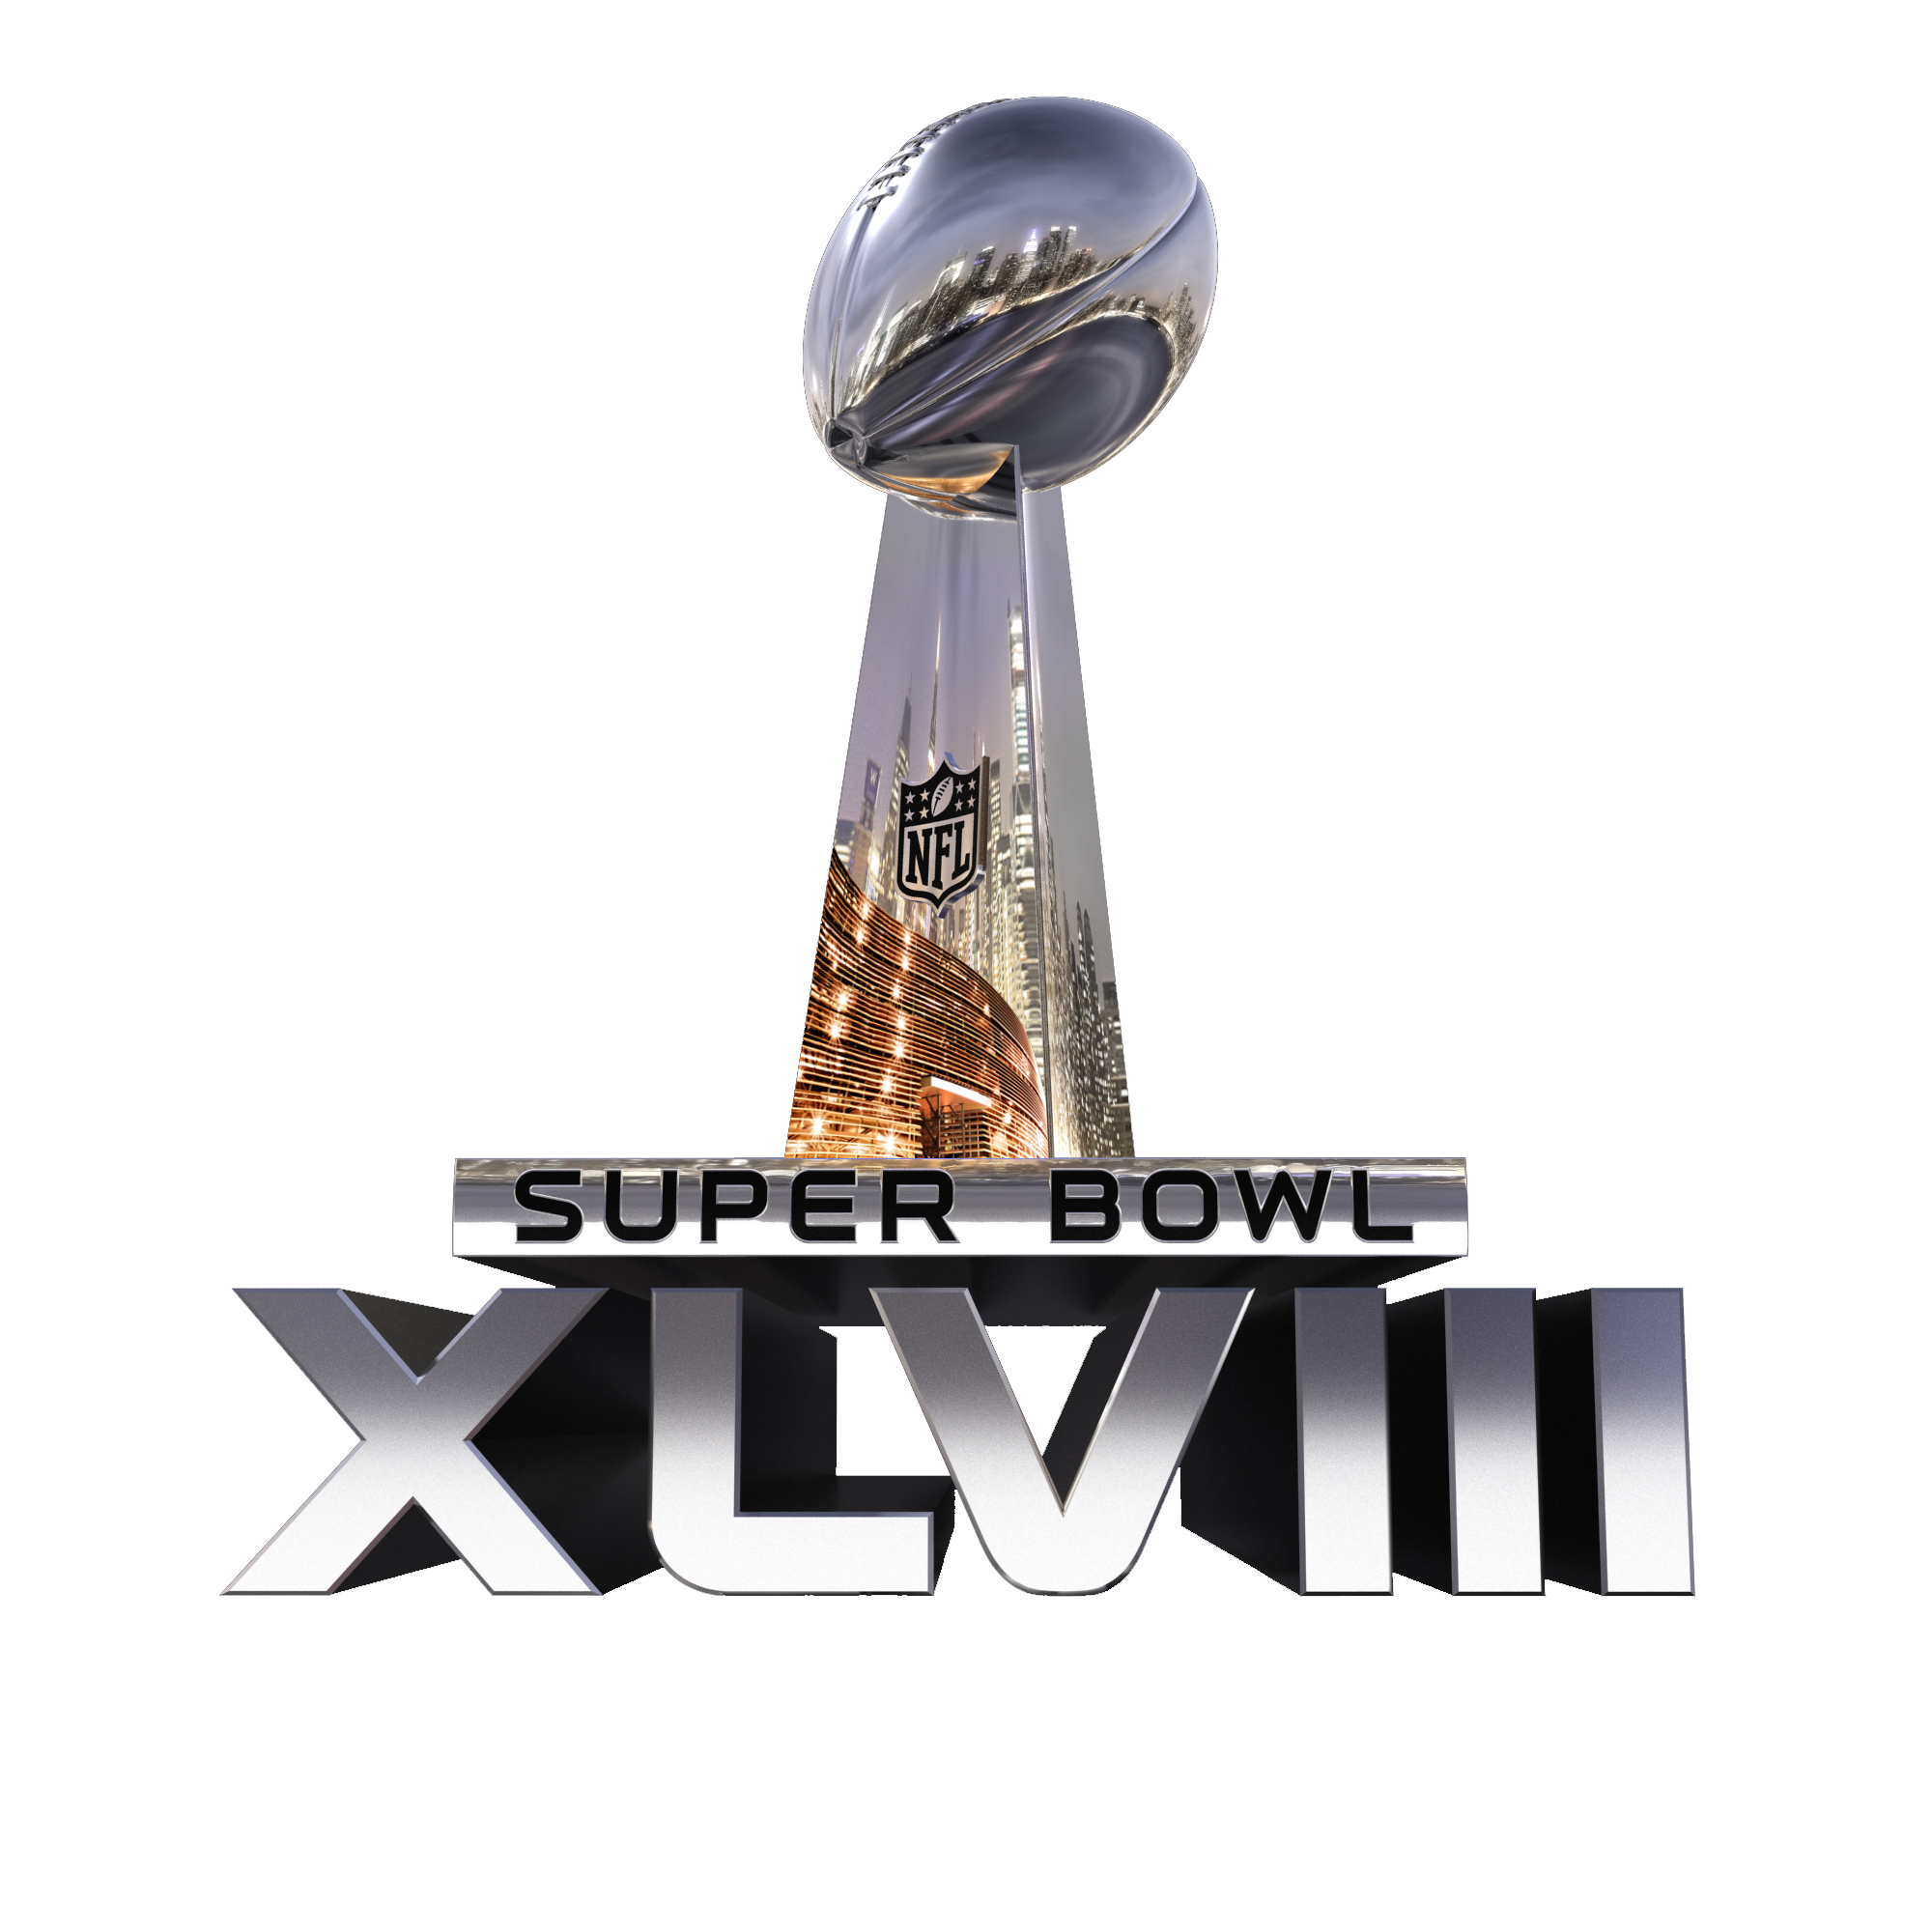 Super Bowl PNG images free download